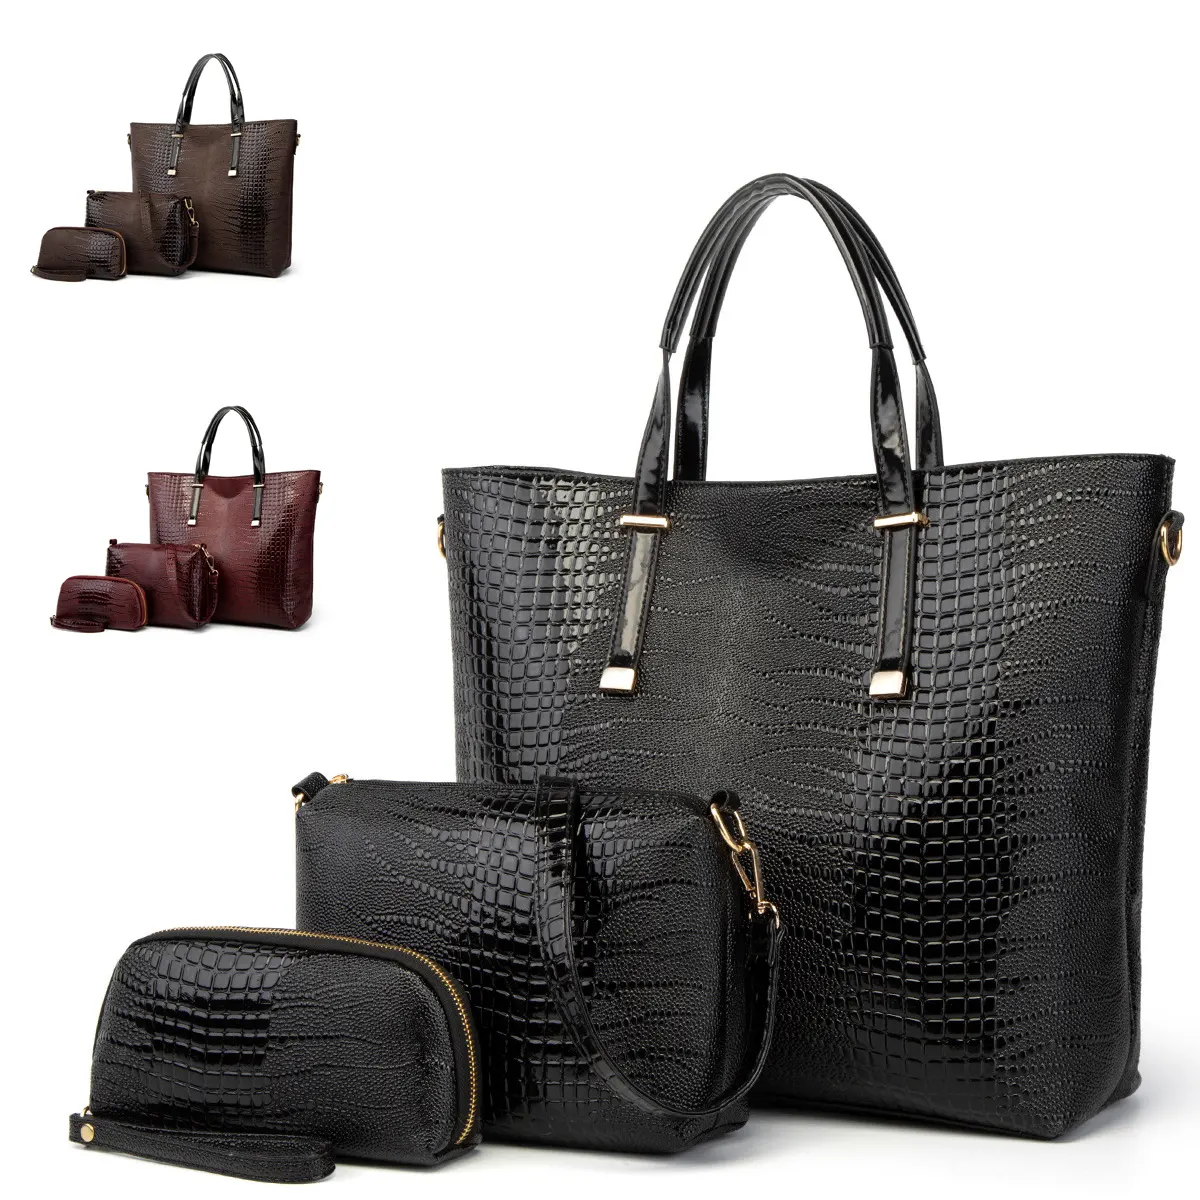 OEM les sacs les sac a main black croco large handbag for lady leather bag female big women bags shoulder women's handbags set